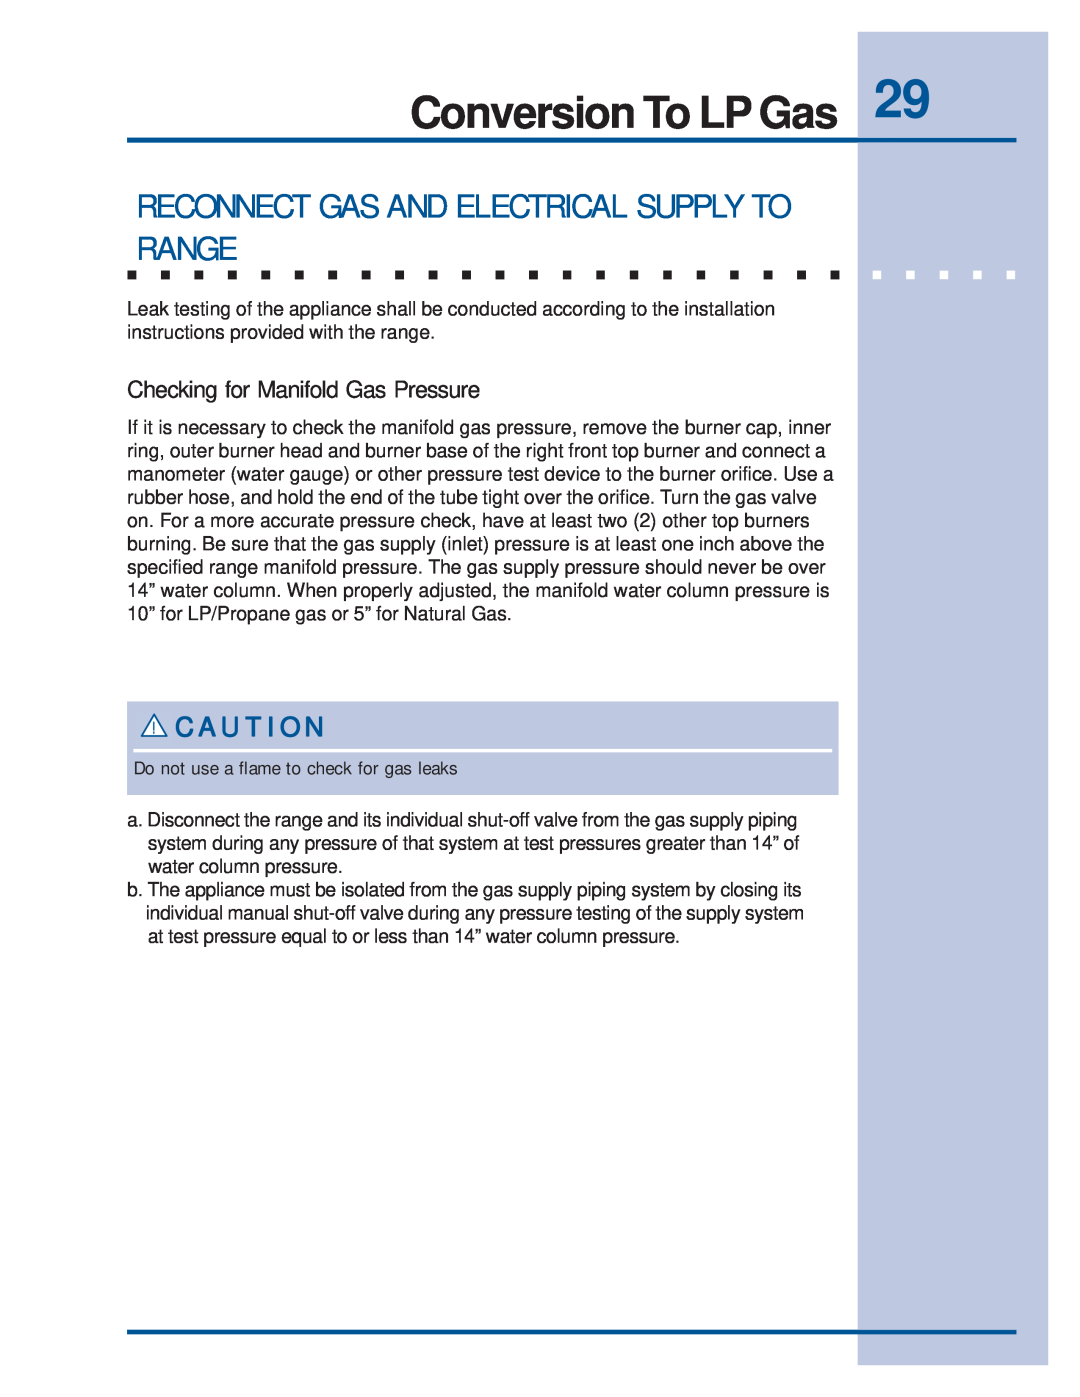 Electrolux 318201761E30GF74GPS, E36GF76GPS, E36GF75GPS Reconnect Gas And Electrical Supply To Range, Conversion To LP Gas 